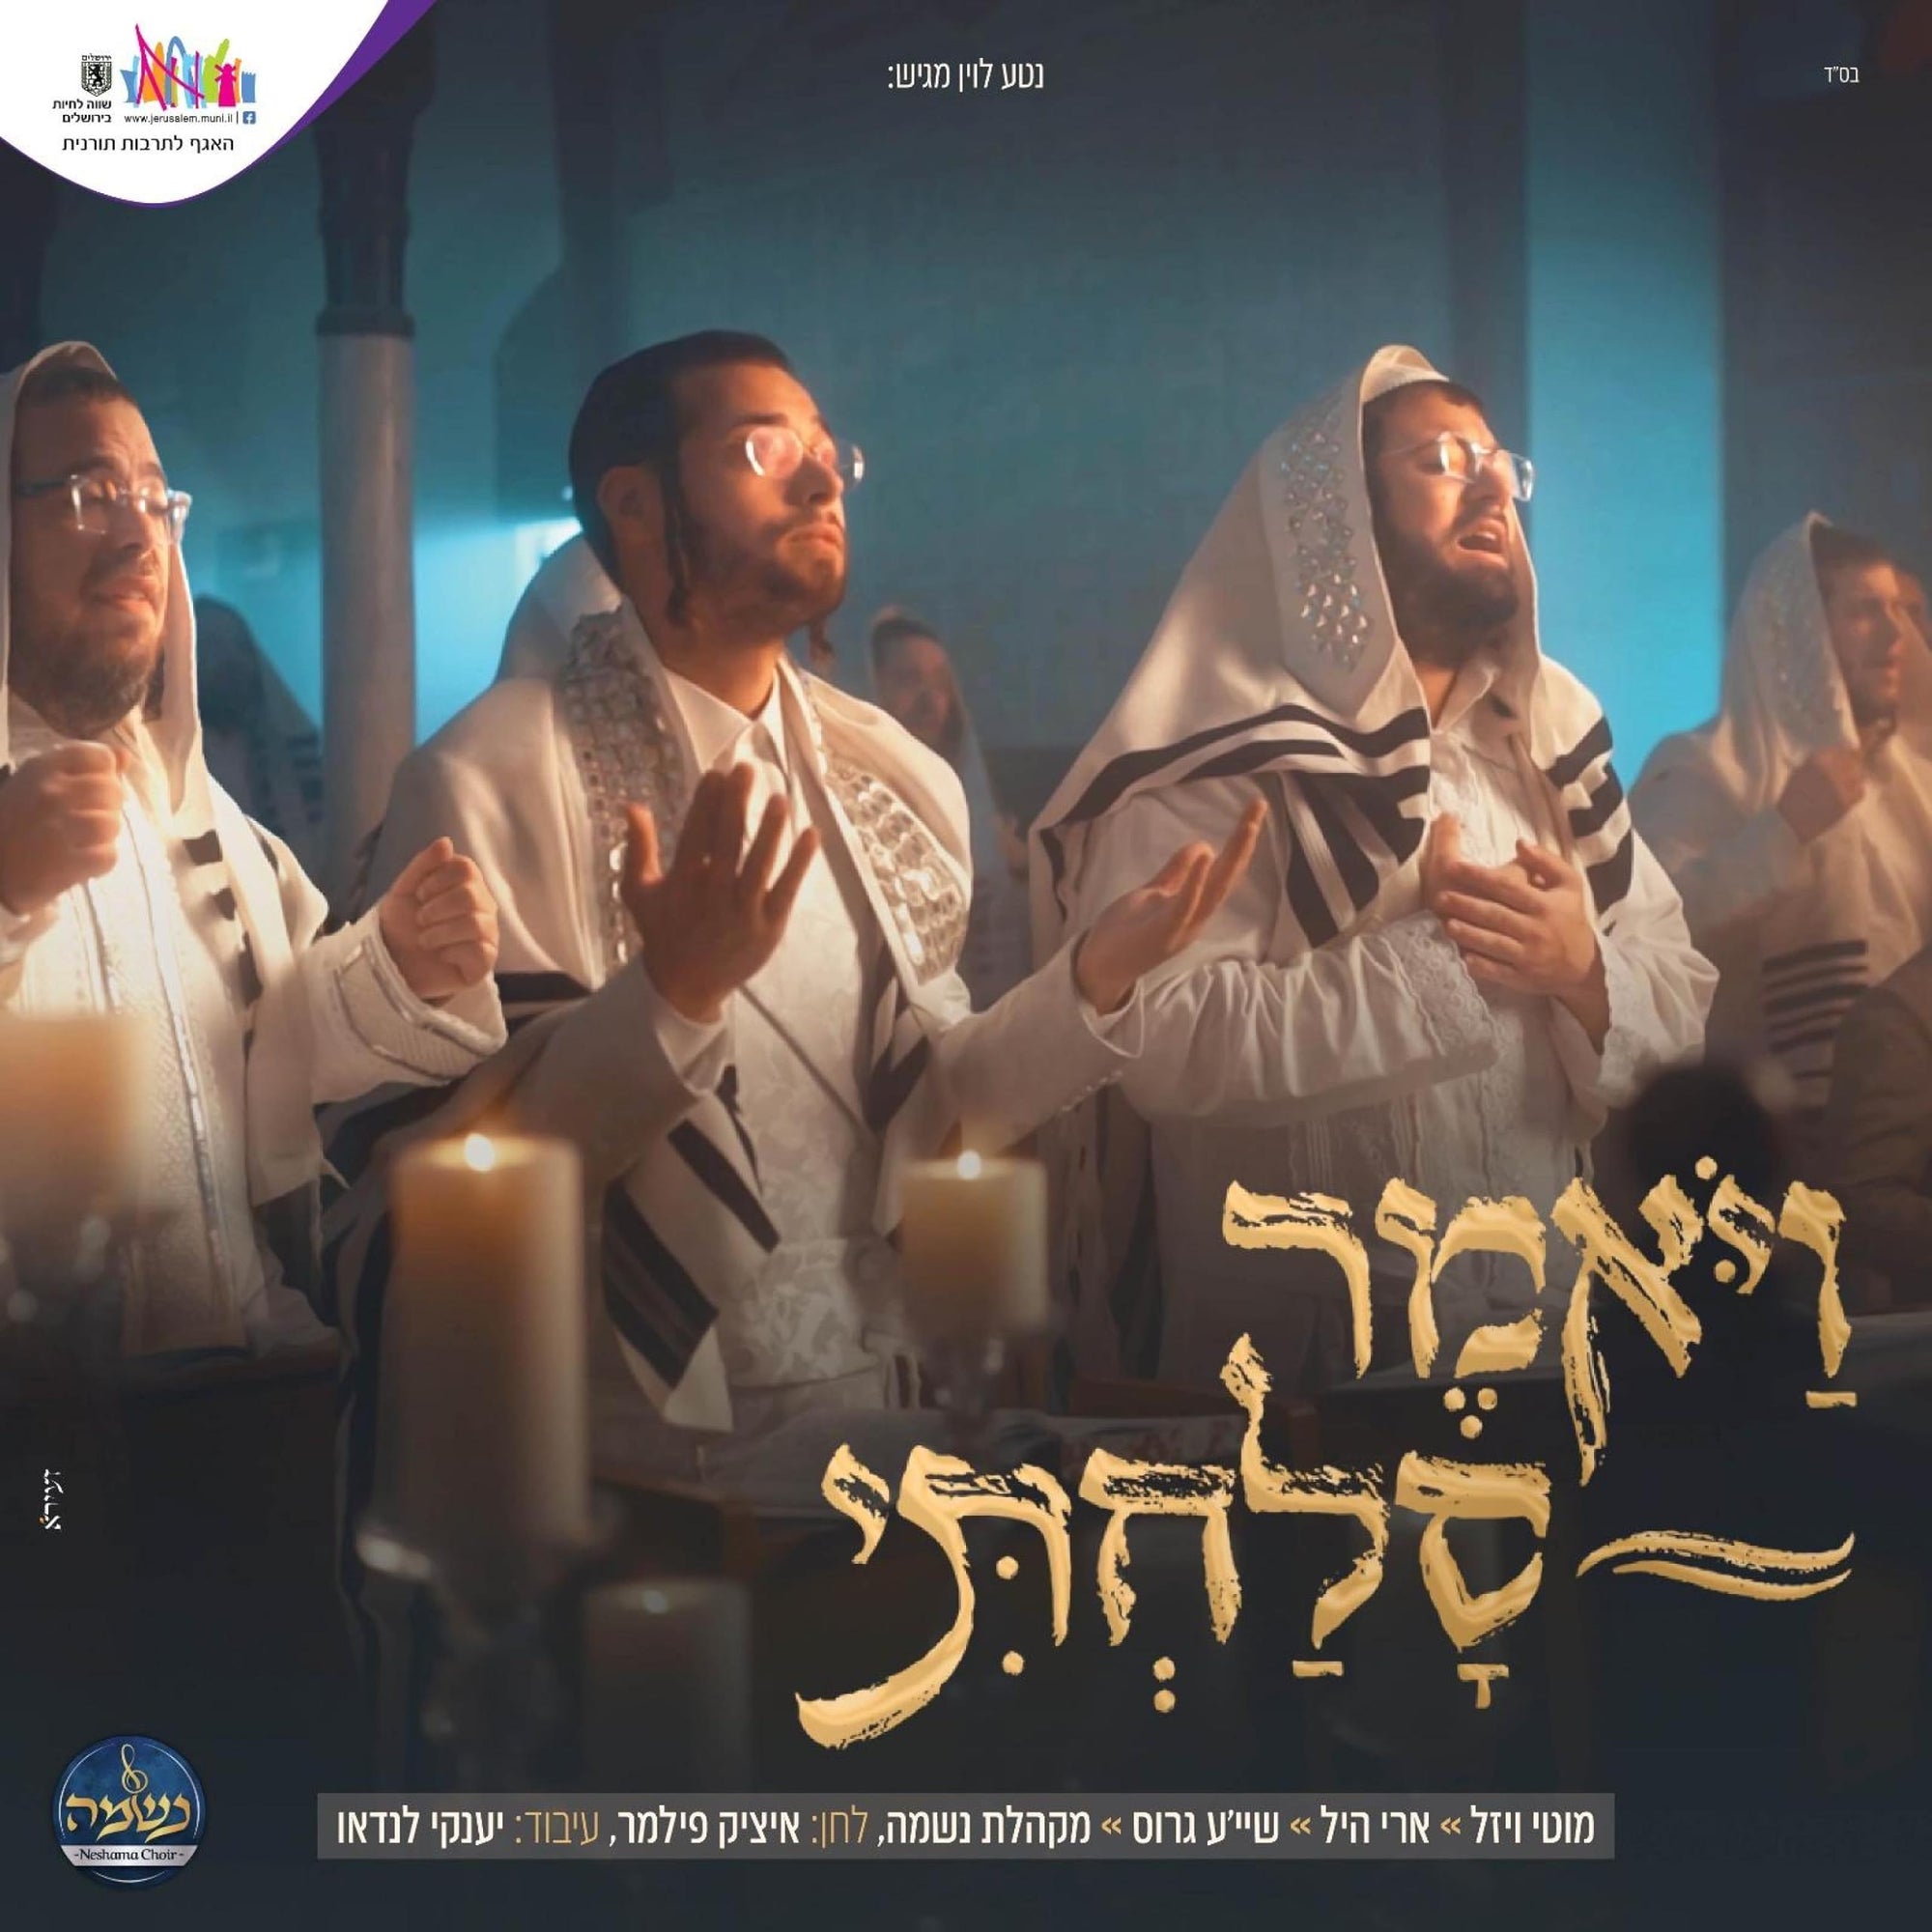 Ari Hill, Motti Weisel, Shaya Gross & Neshama Choir - Vayomer Solachti (Single)